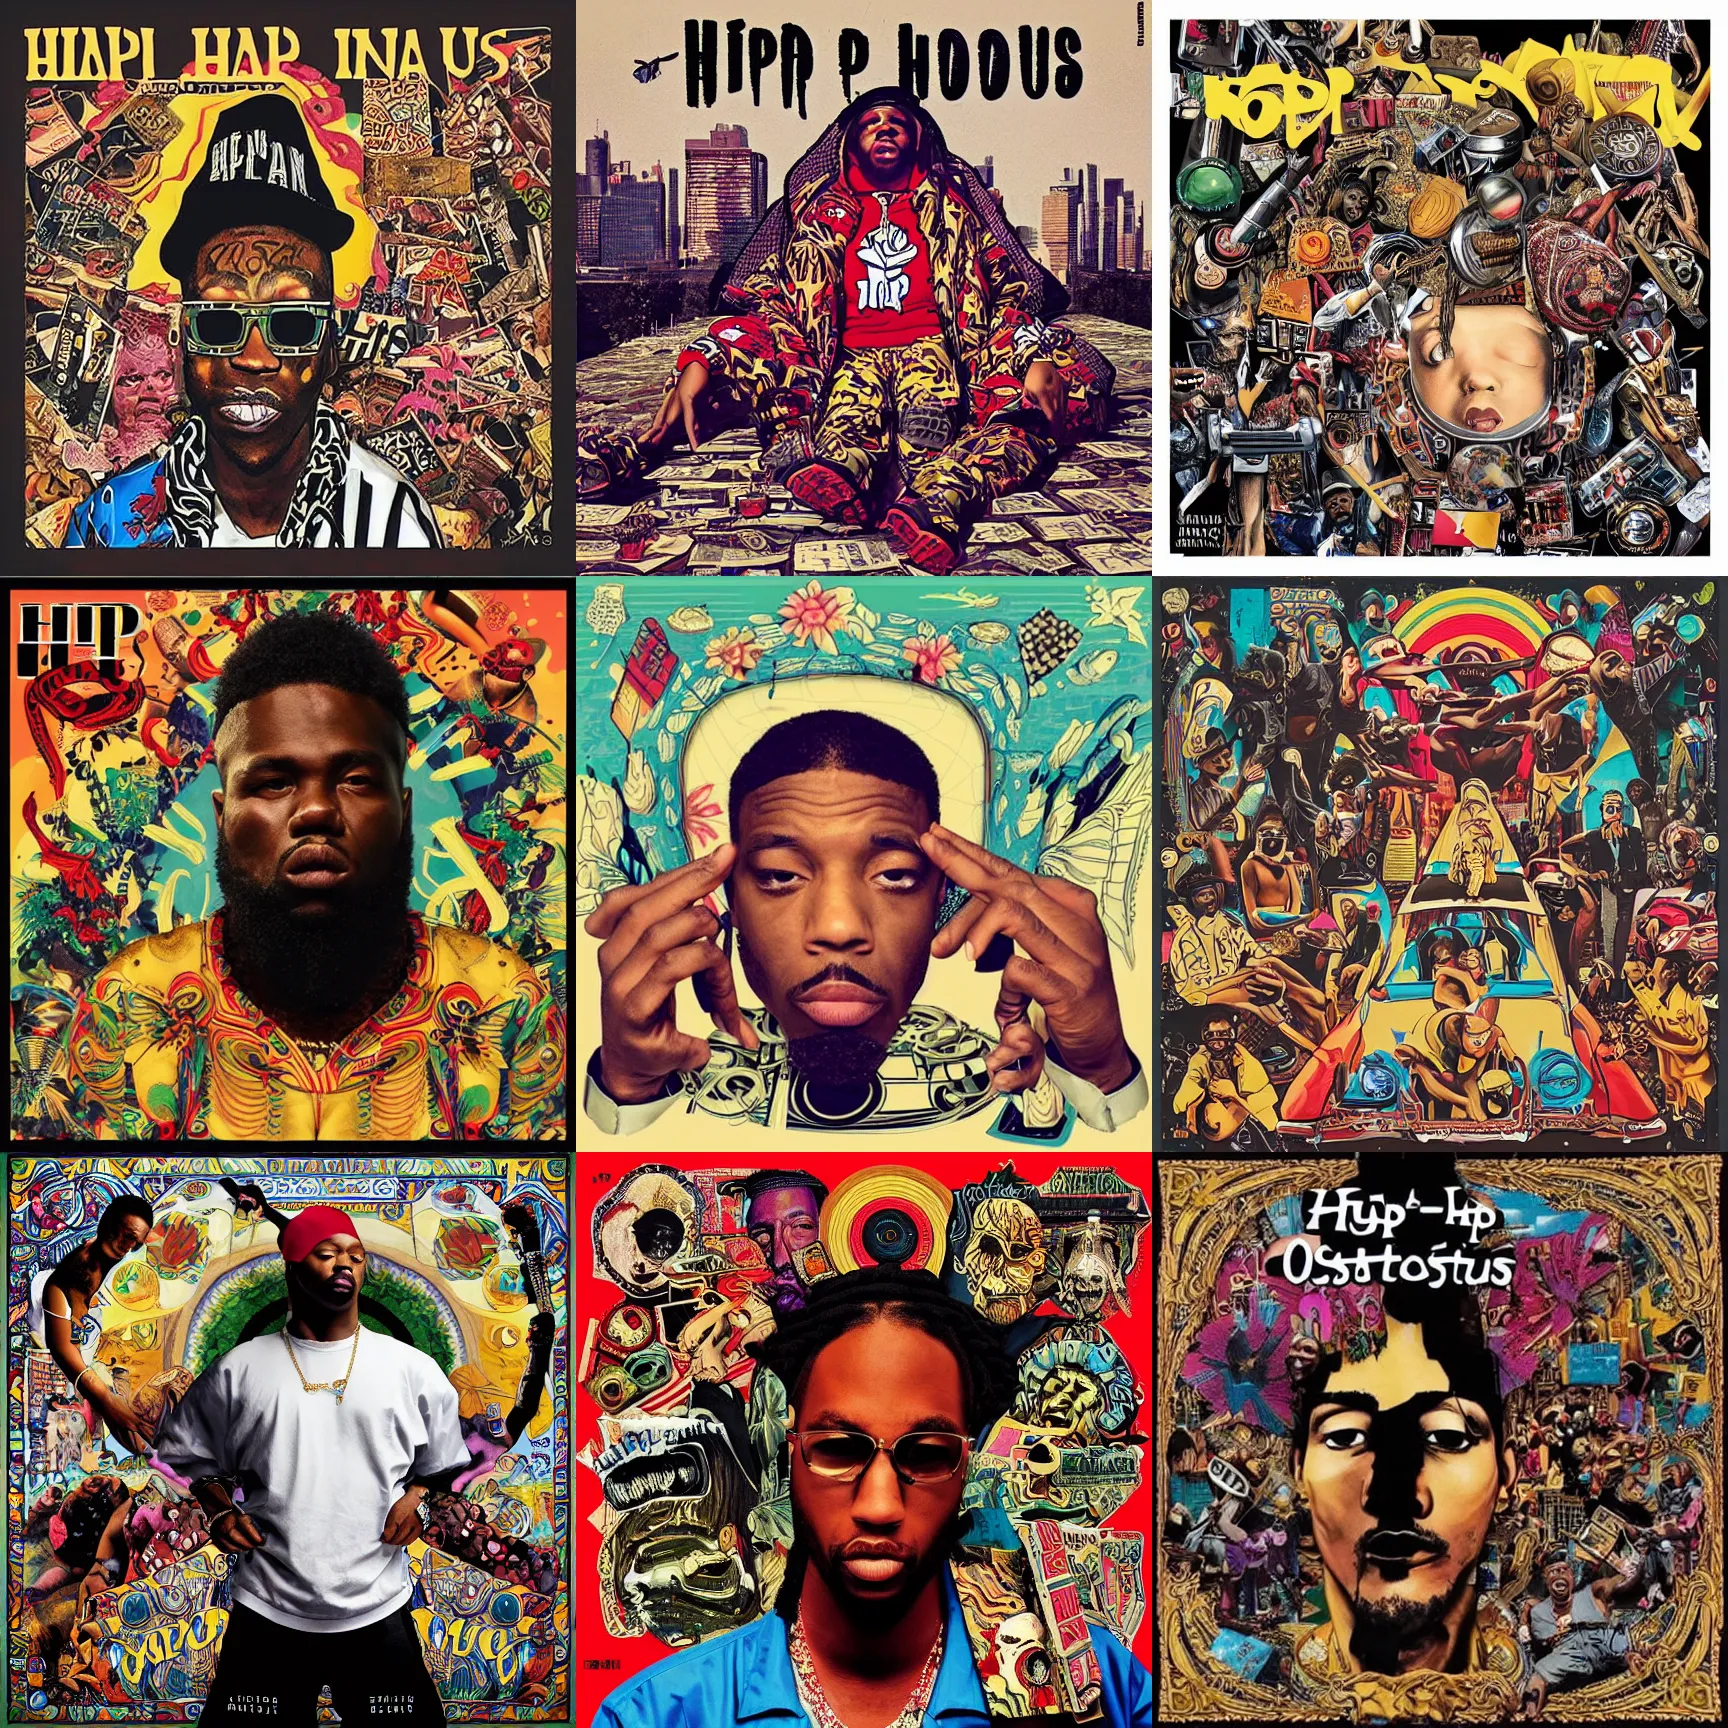 Prompt: hip - hop album art cover, ostentatious, absurd